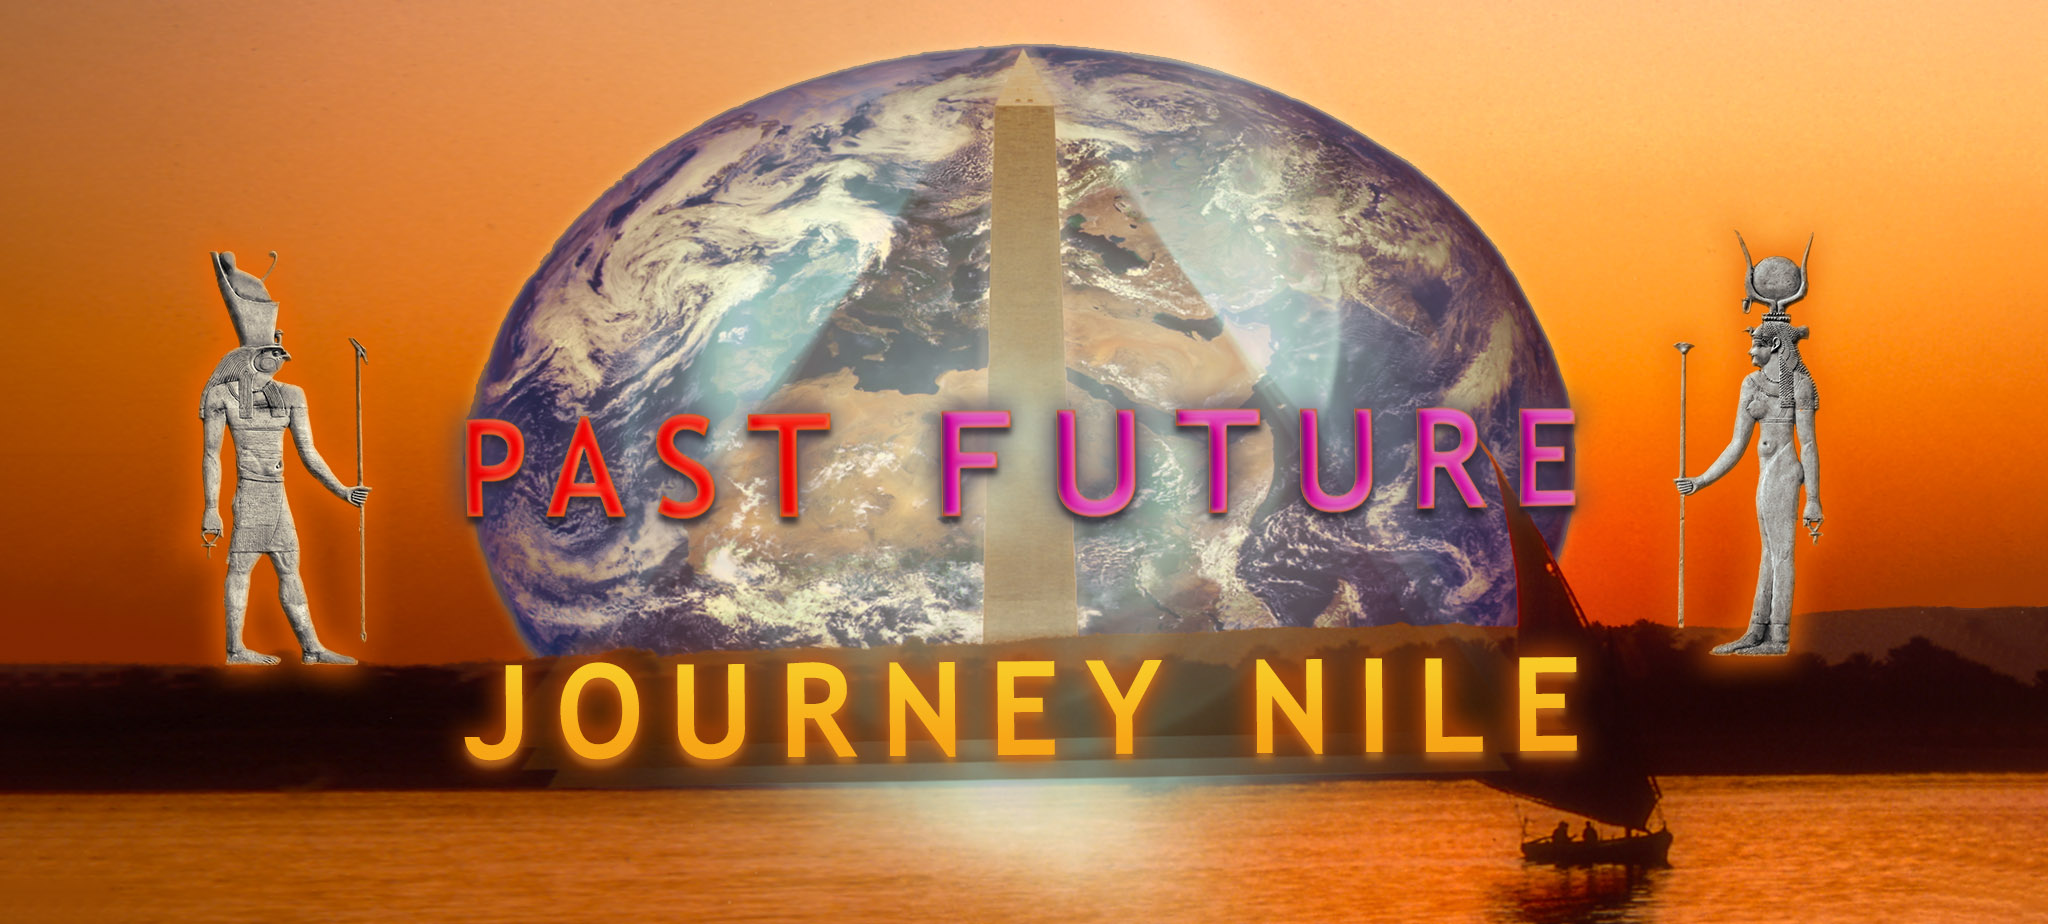 Past Future Journey Nile Title